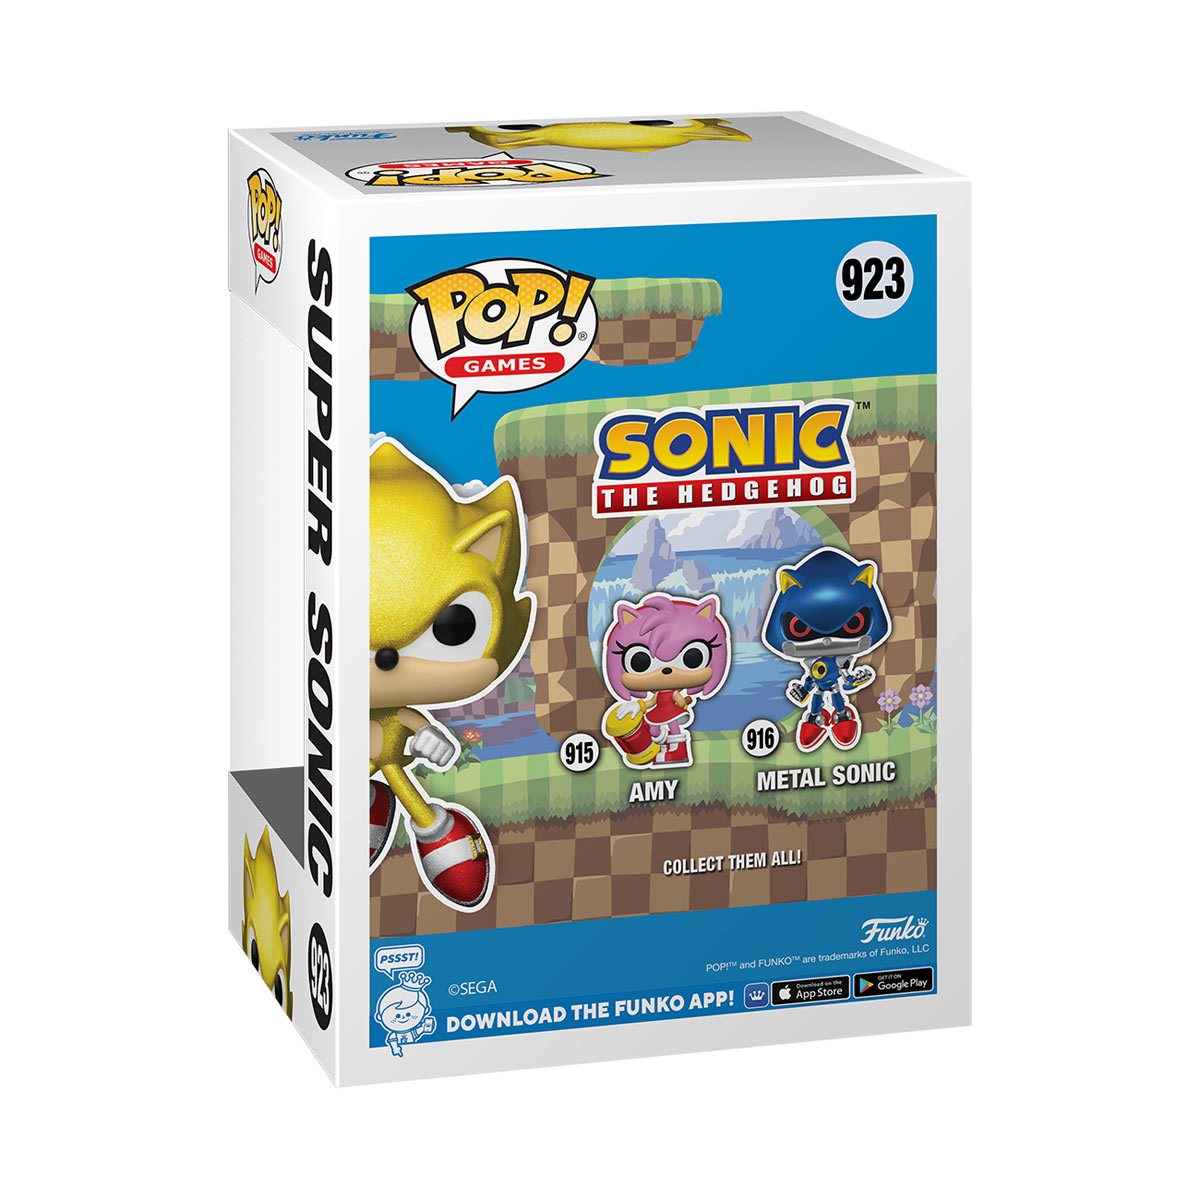 Sonic the Hedgehog Super Sonic Funko Pop! Vinyl Figure #923 Limited Chase